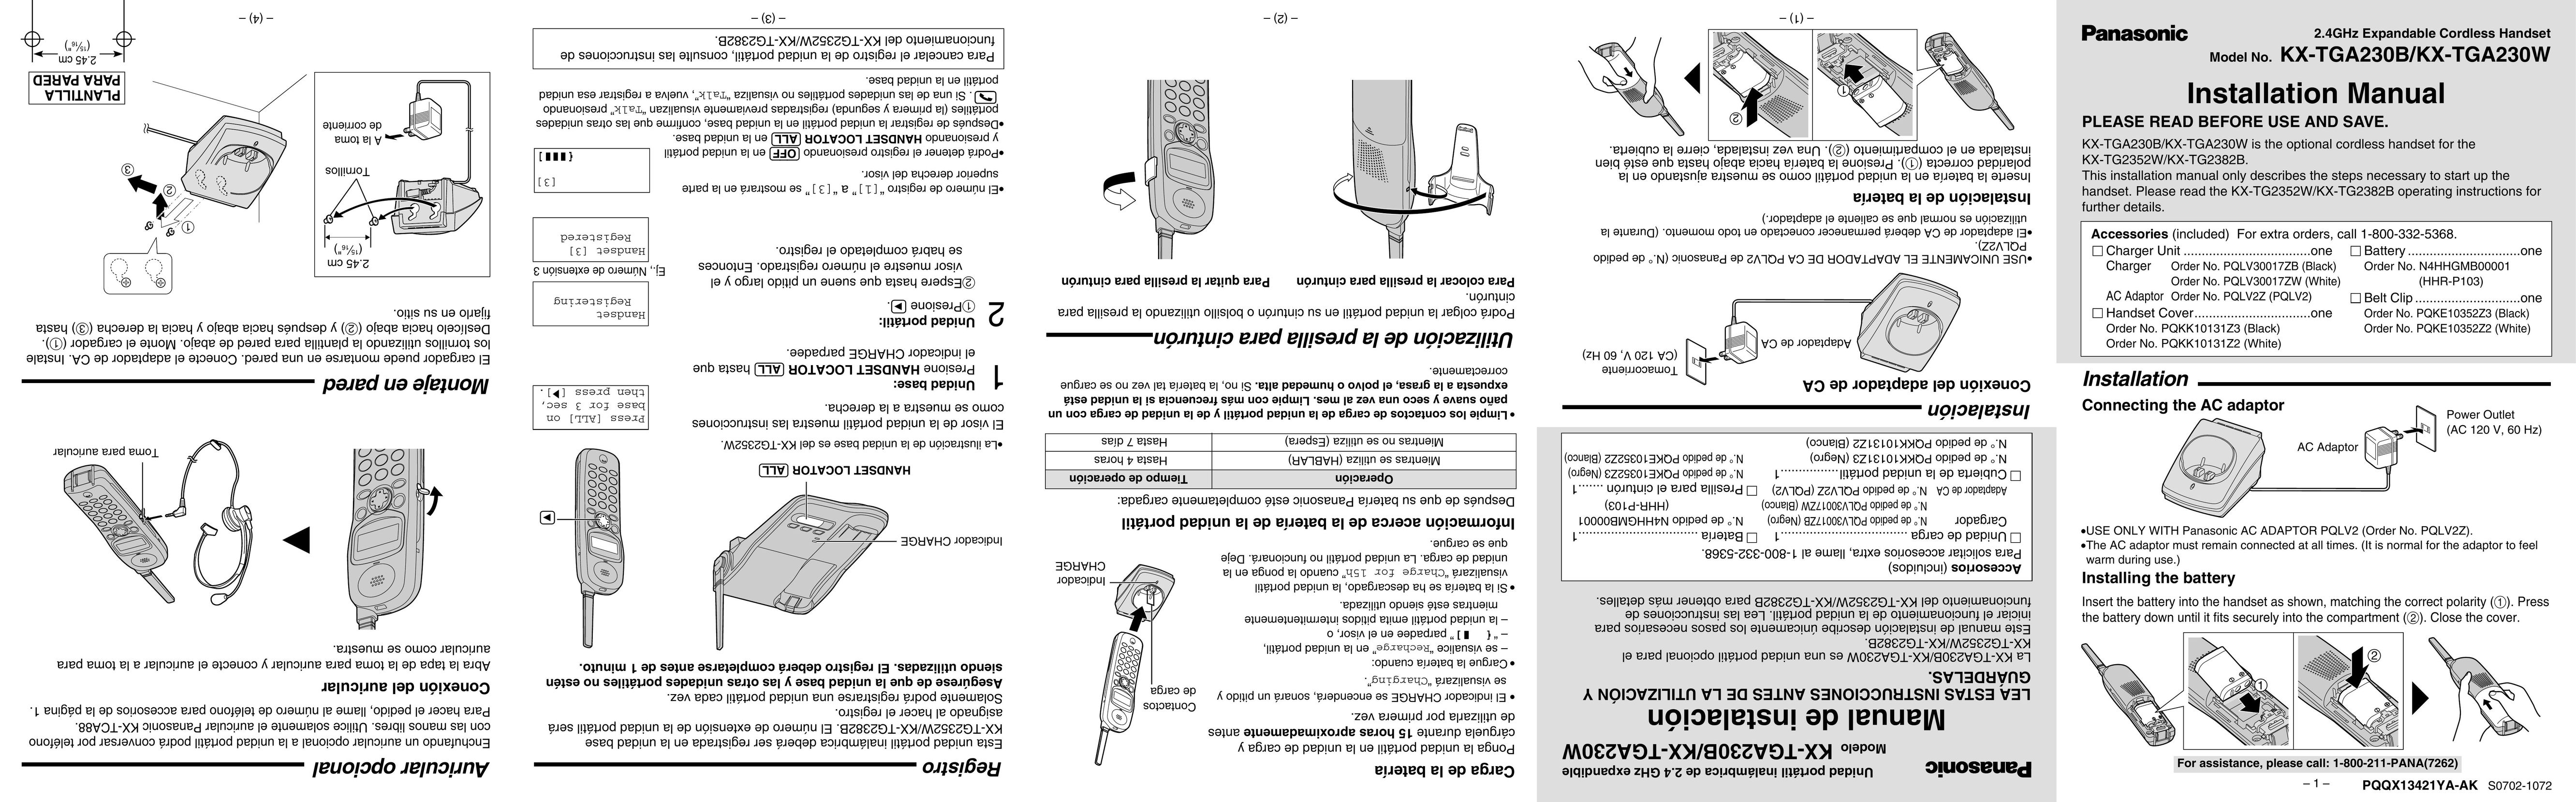 Panasonic 391 Telephone User Manual